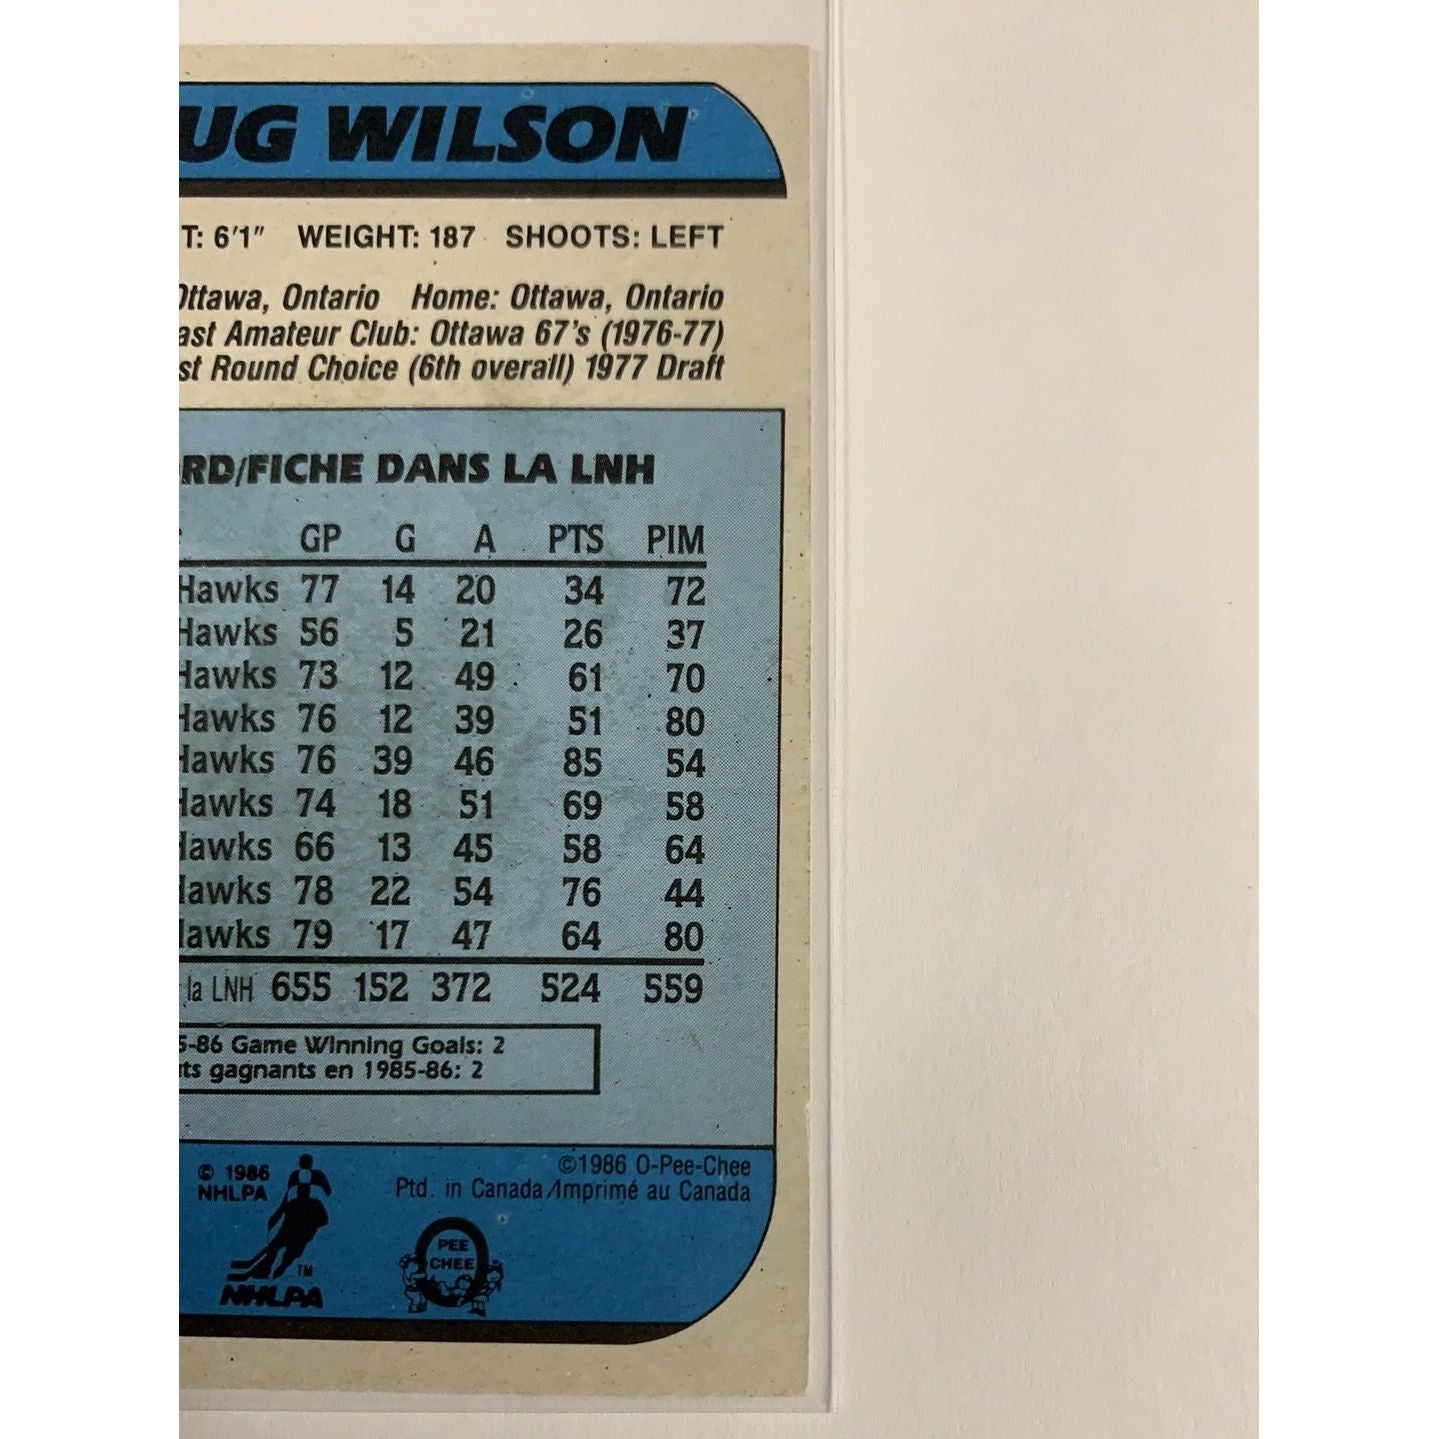  1986-87 O-Pee-Chee Doug Wilson Base #106  Local Legends Cards & Collectibles